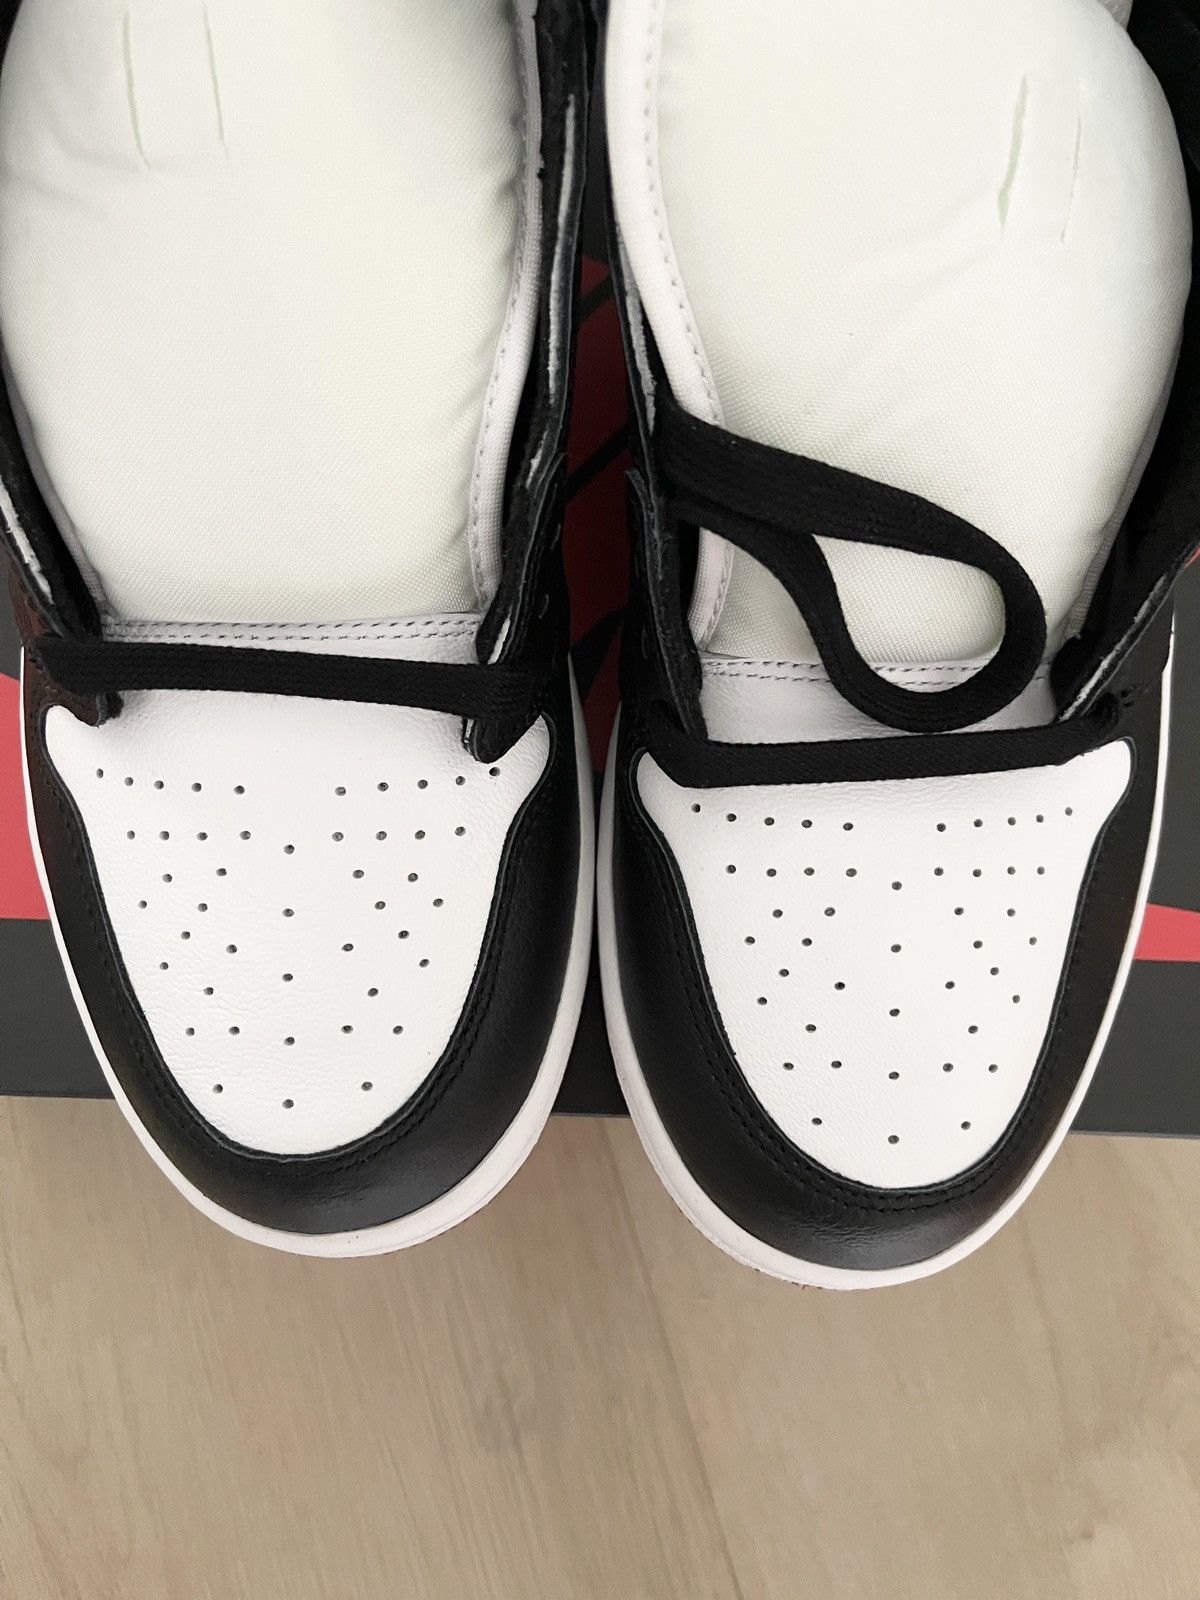 Jordan Brand - 2019 Air Jordan 1 High Saint Black Toe (Men Size 7.5) - 5